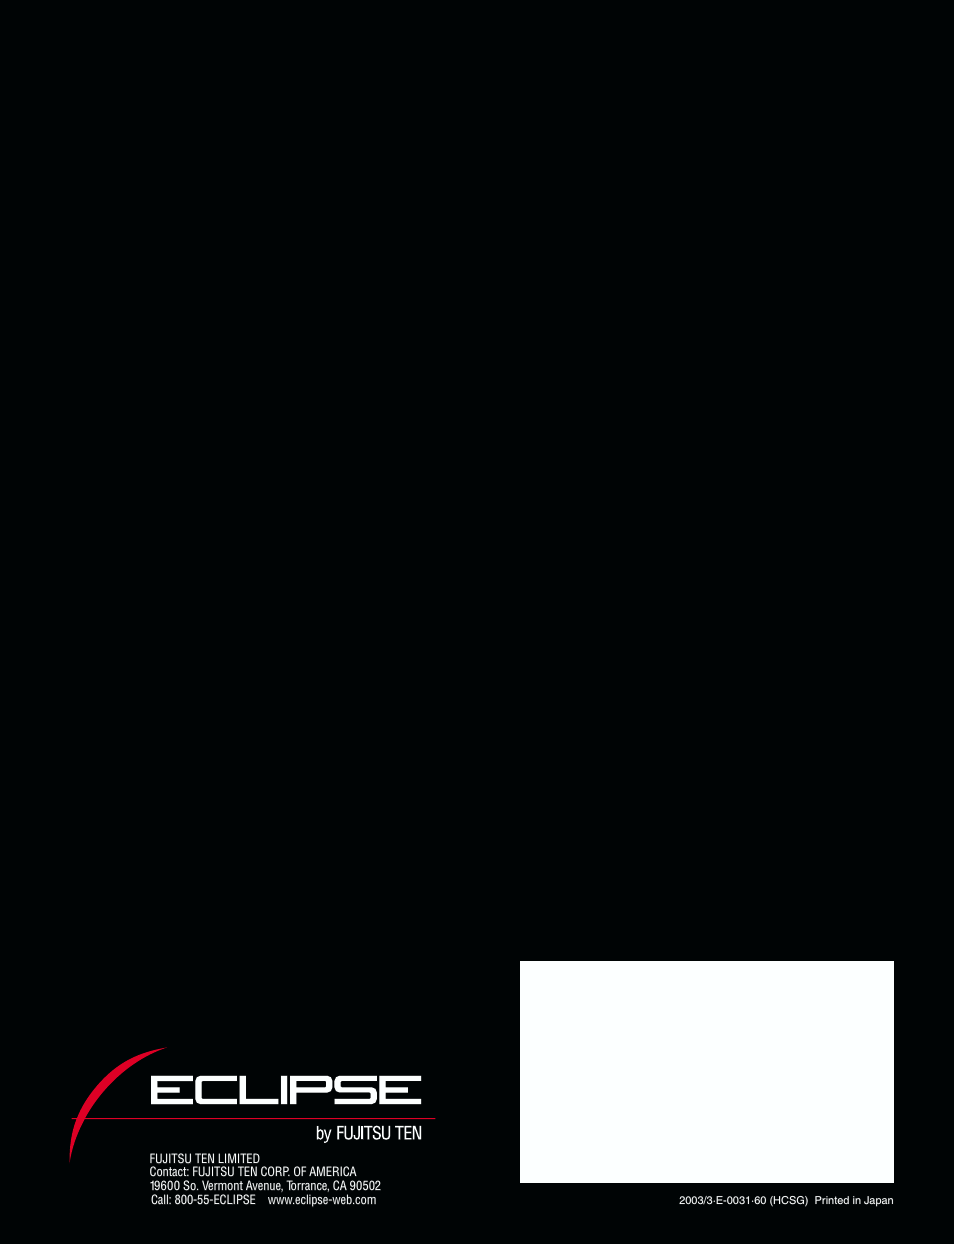 Eclipse - Fujitsu Ten ECLIPSE DA7232 User Manual | Page 12 / 12